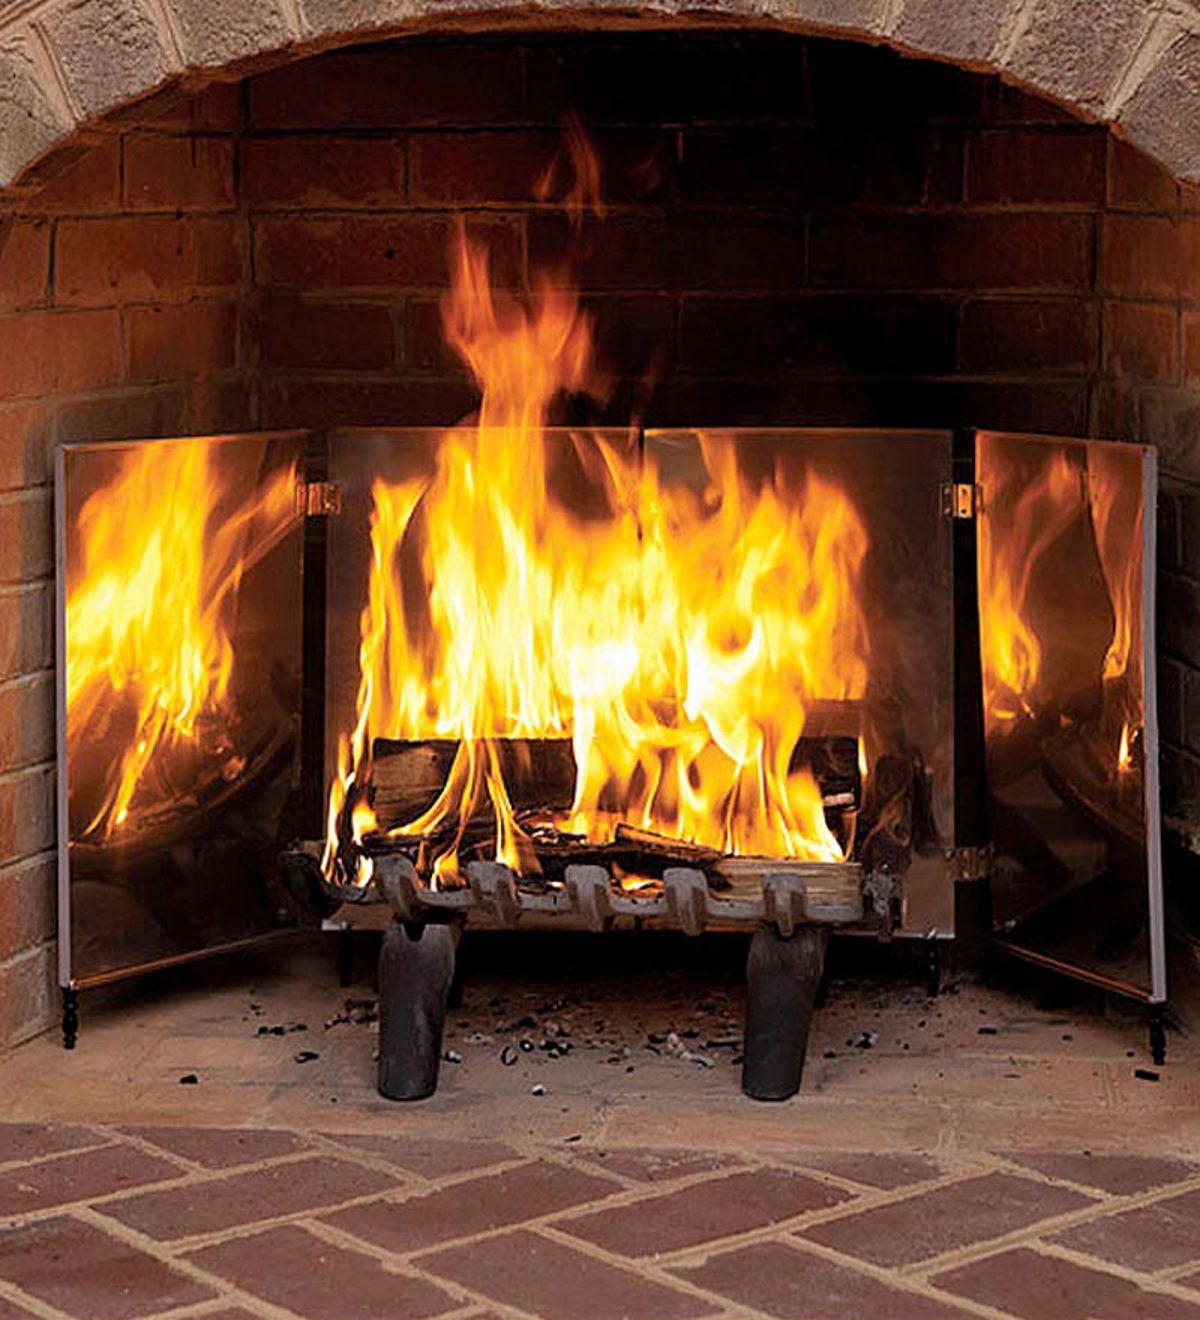 Medium Heat-Reflecting Fireplace Bright Reflectors